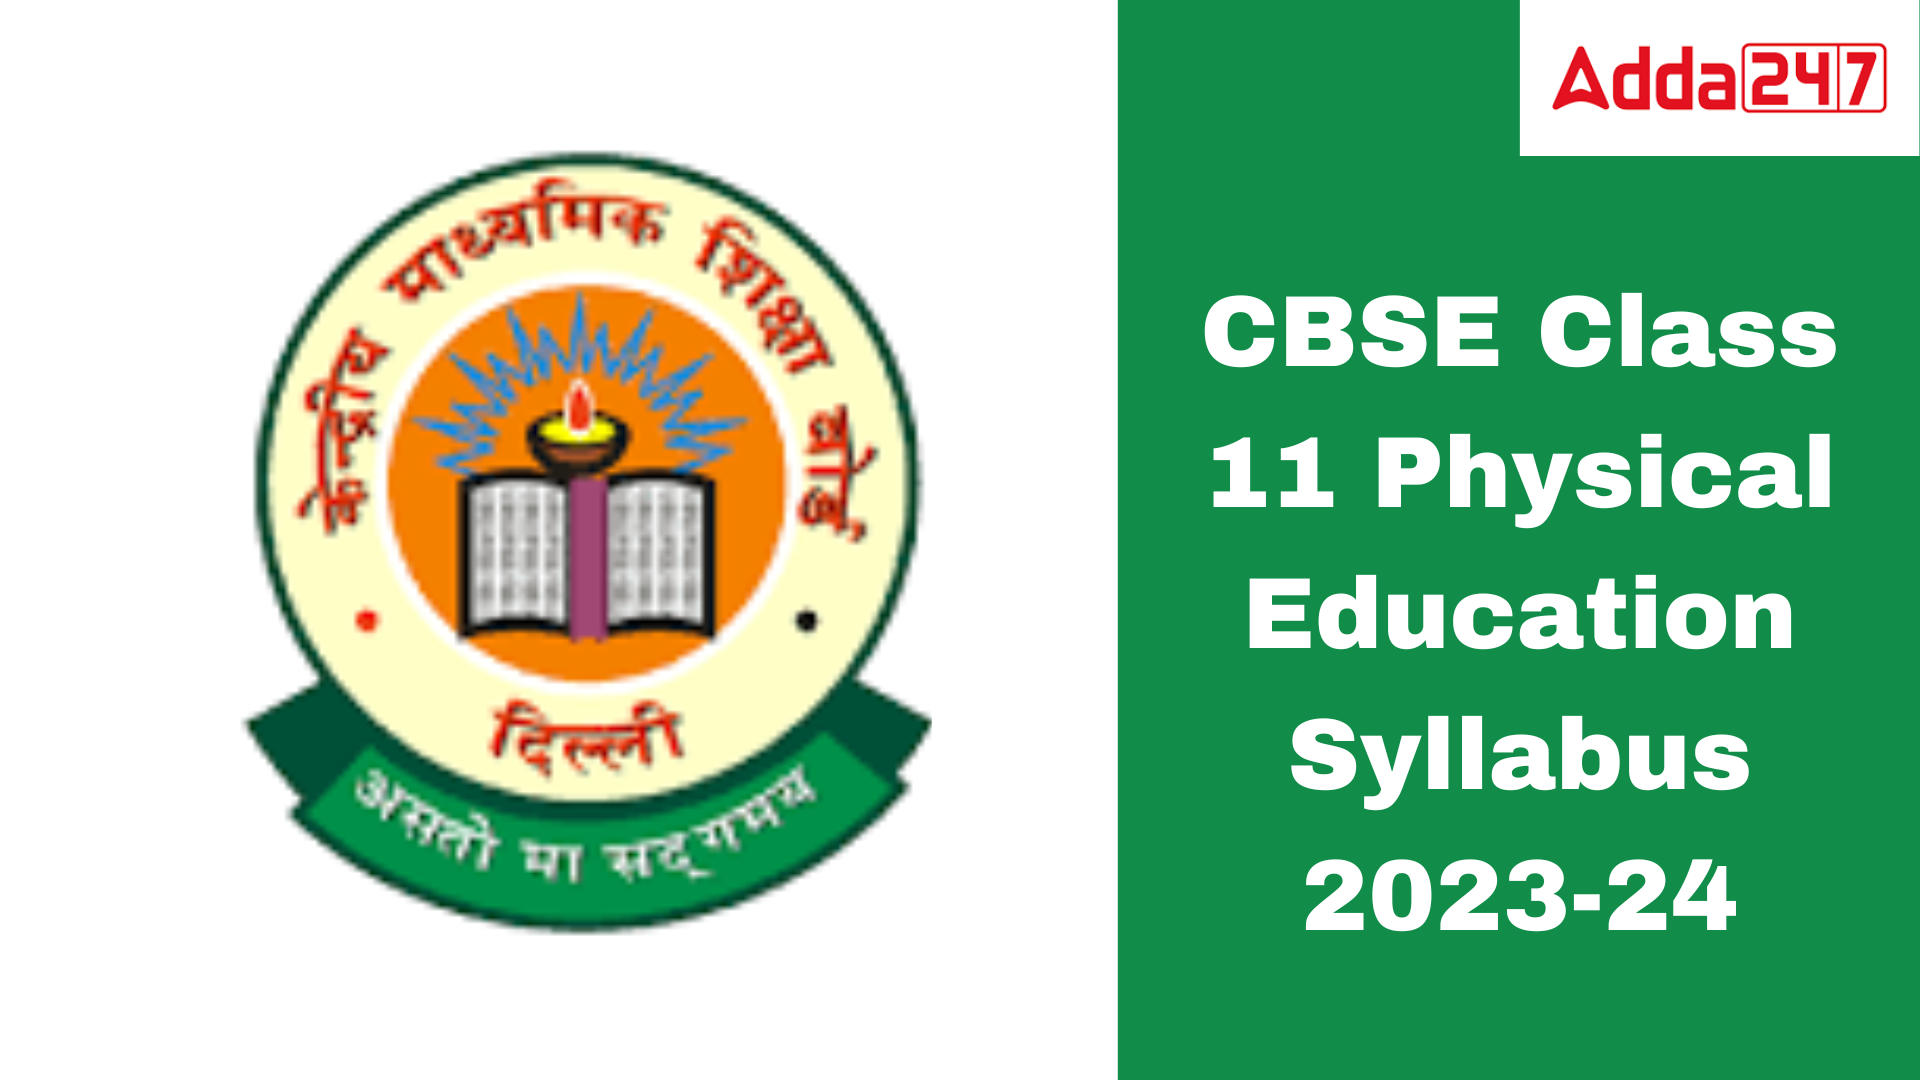 CBSE Class 11 Physical Education Syllabus 2023-24